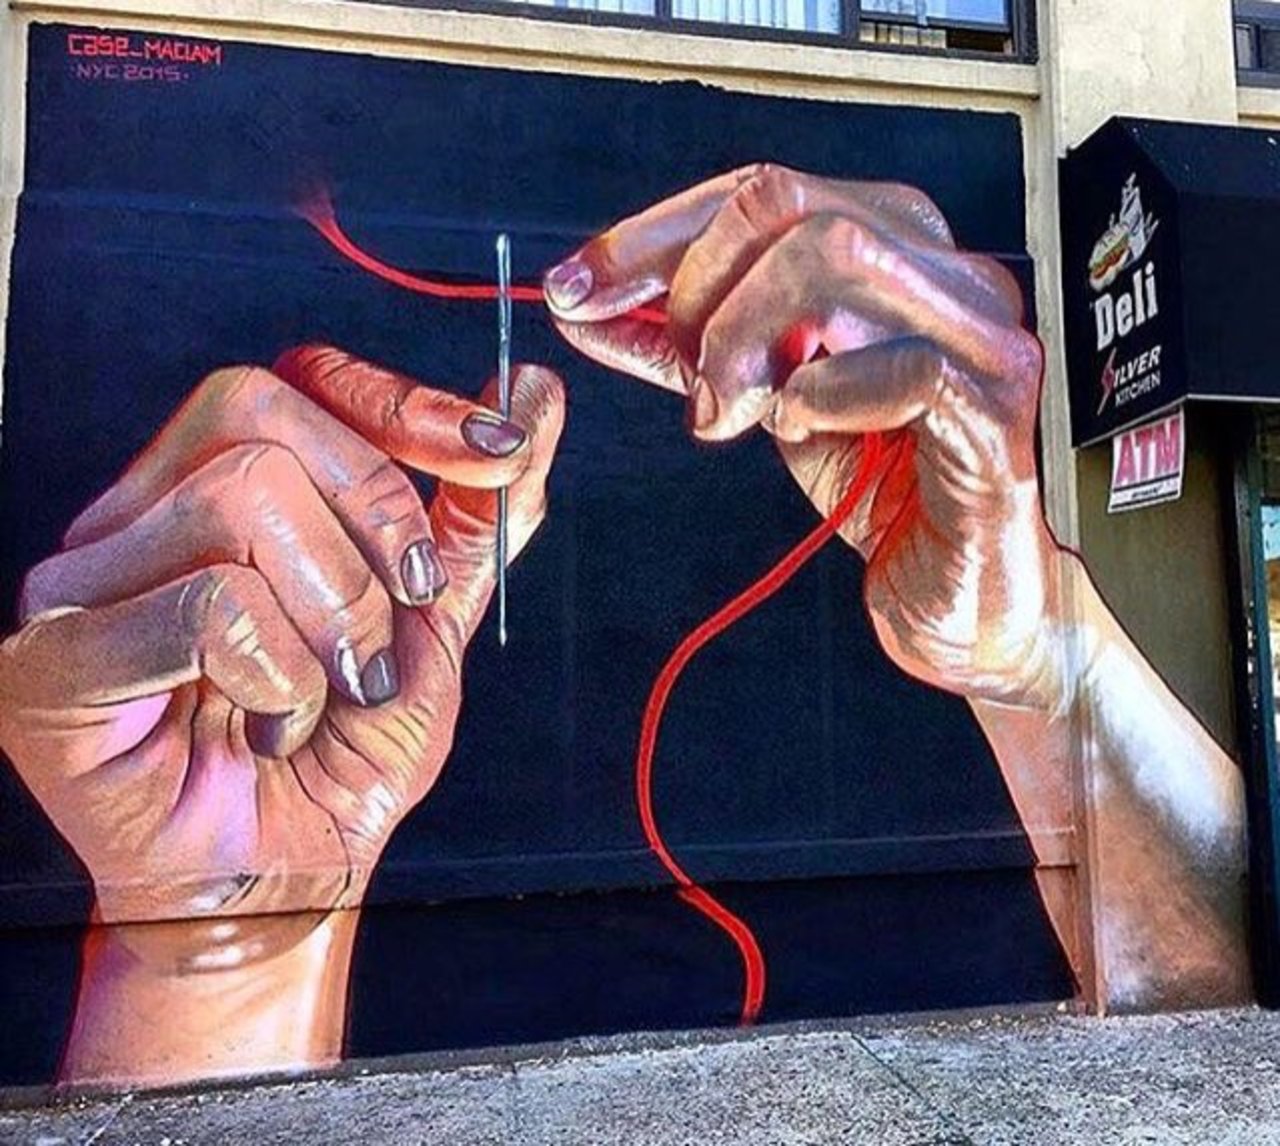 New Street Art by Case Ma'Claim in NYC 

#art #graffiti #mural #streetart https://t.co/on9W2o1Rgj